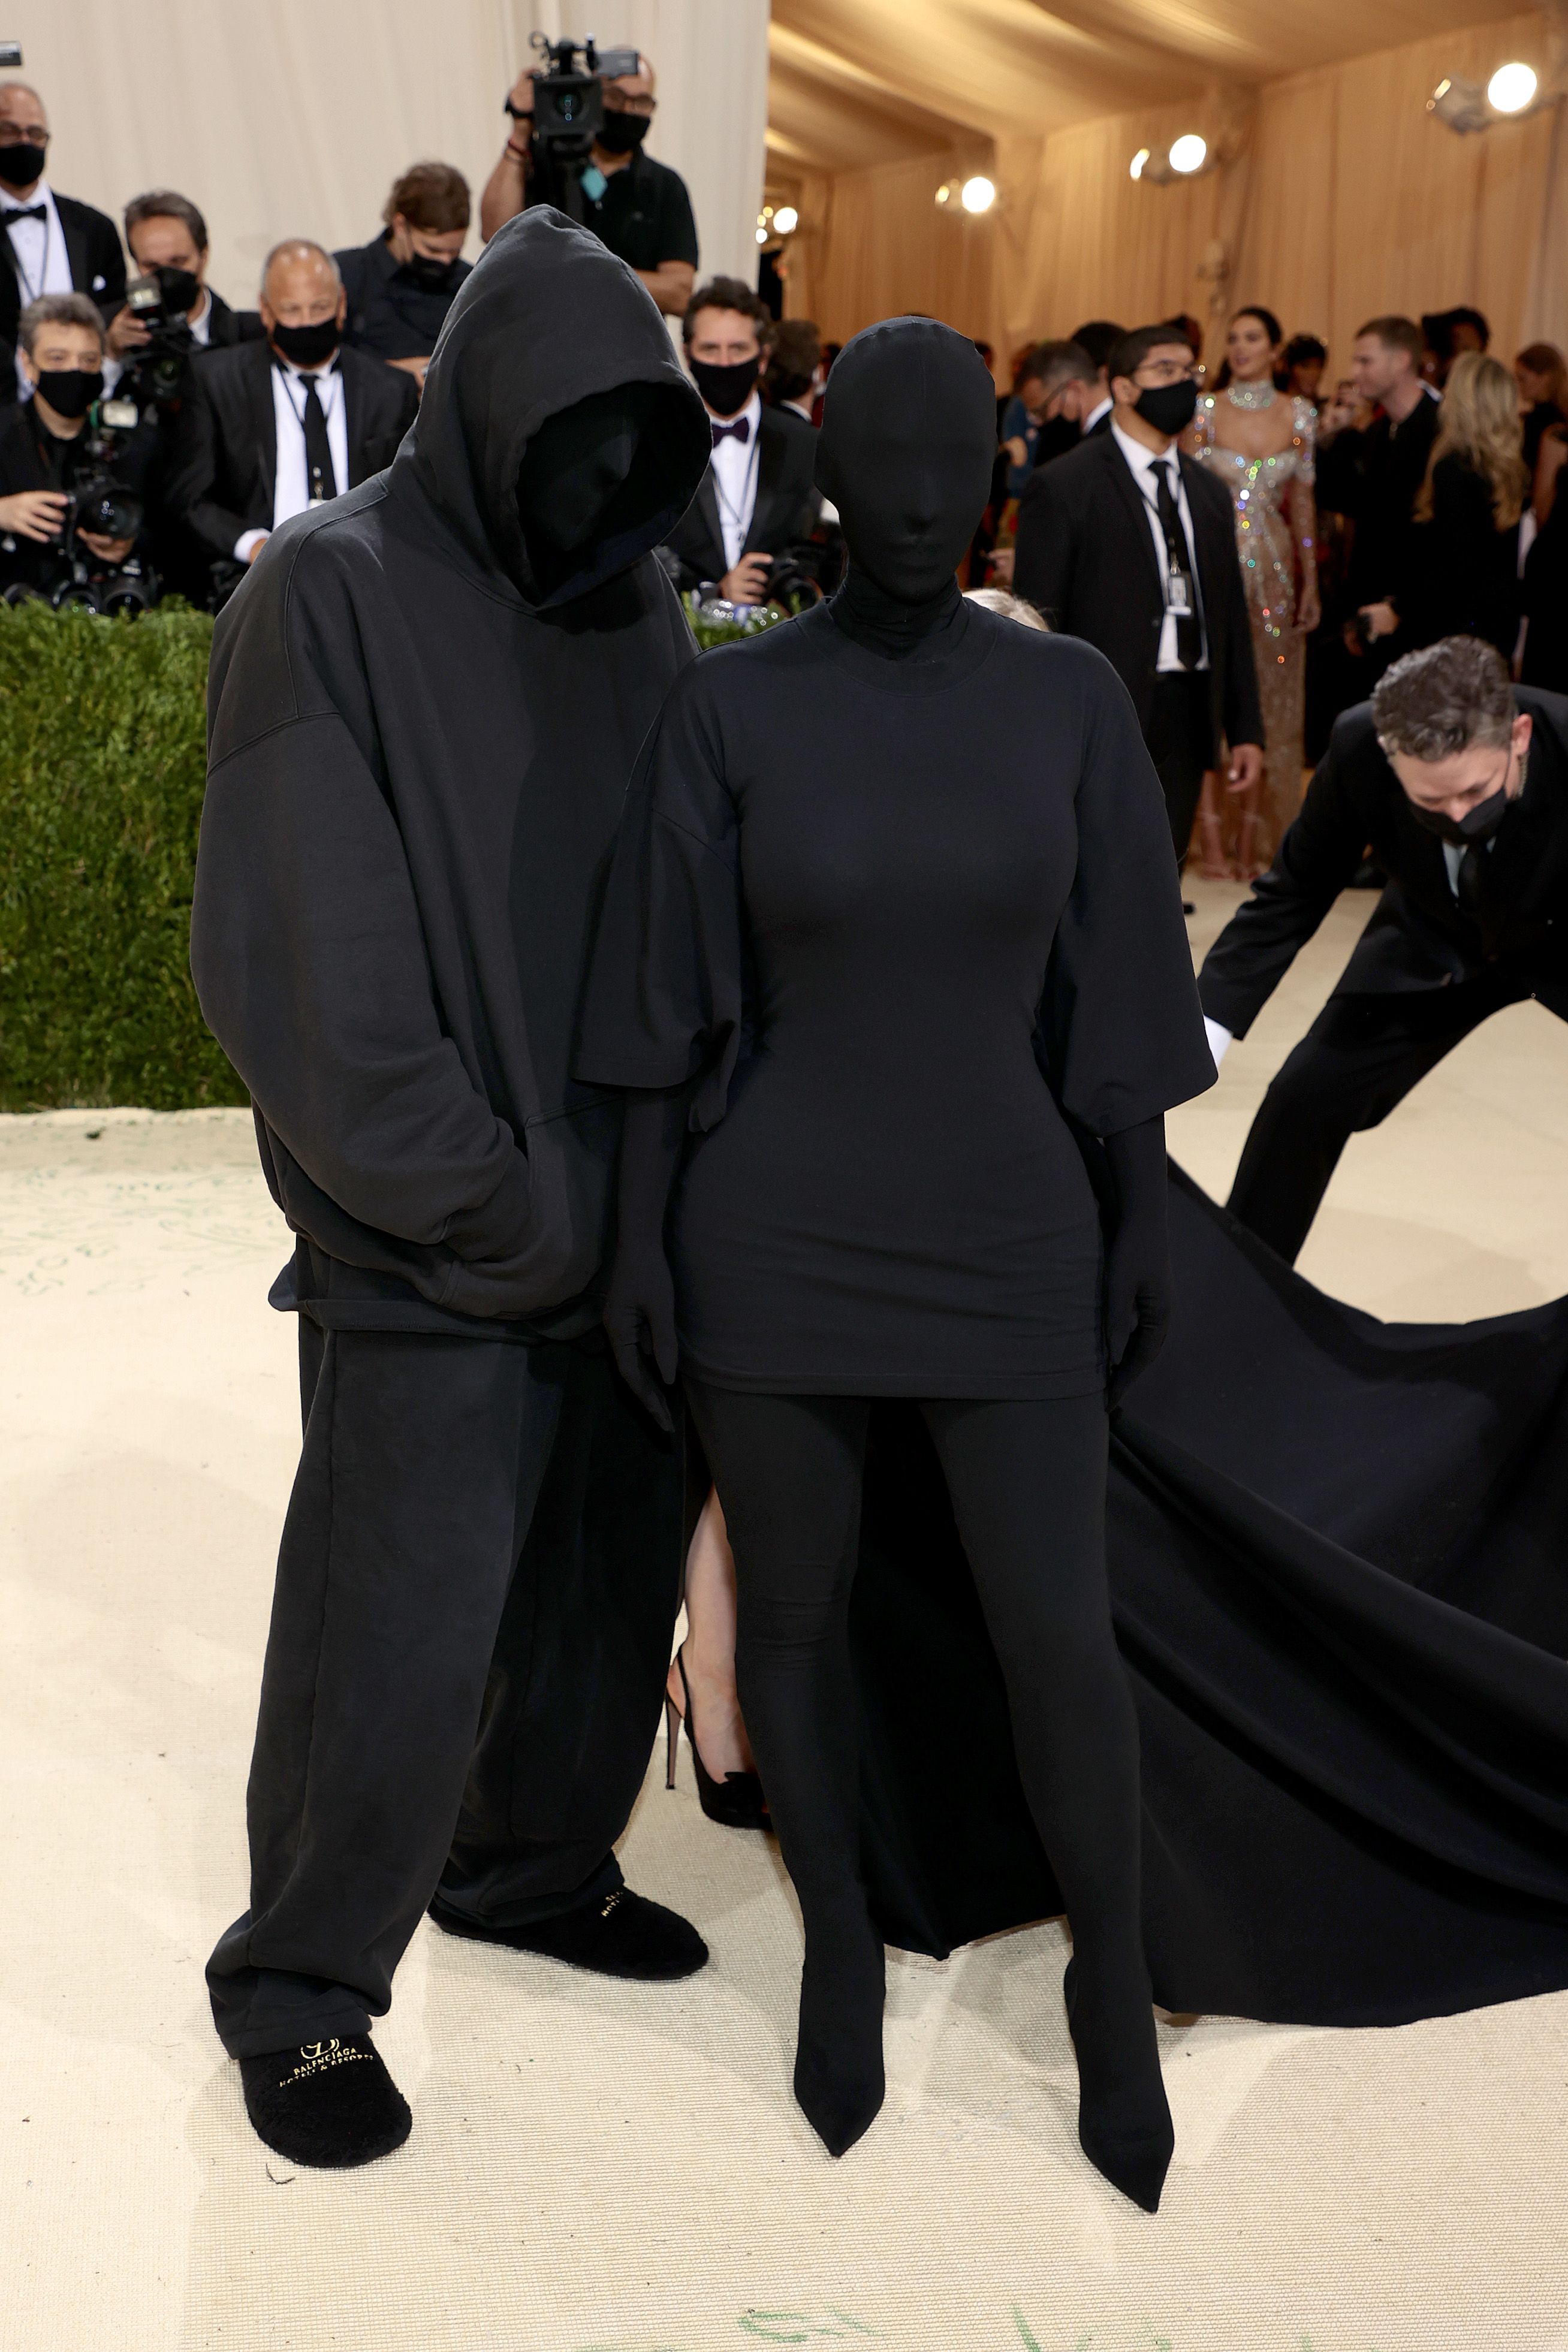 KIM BLACK BODYSUIT with GLOVES  Celebrity outfits, Black bodysuit